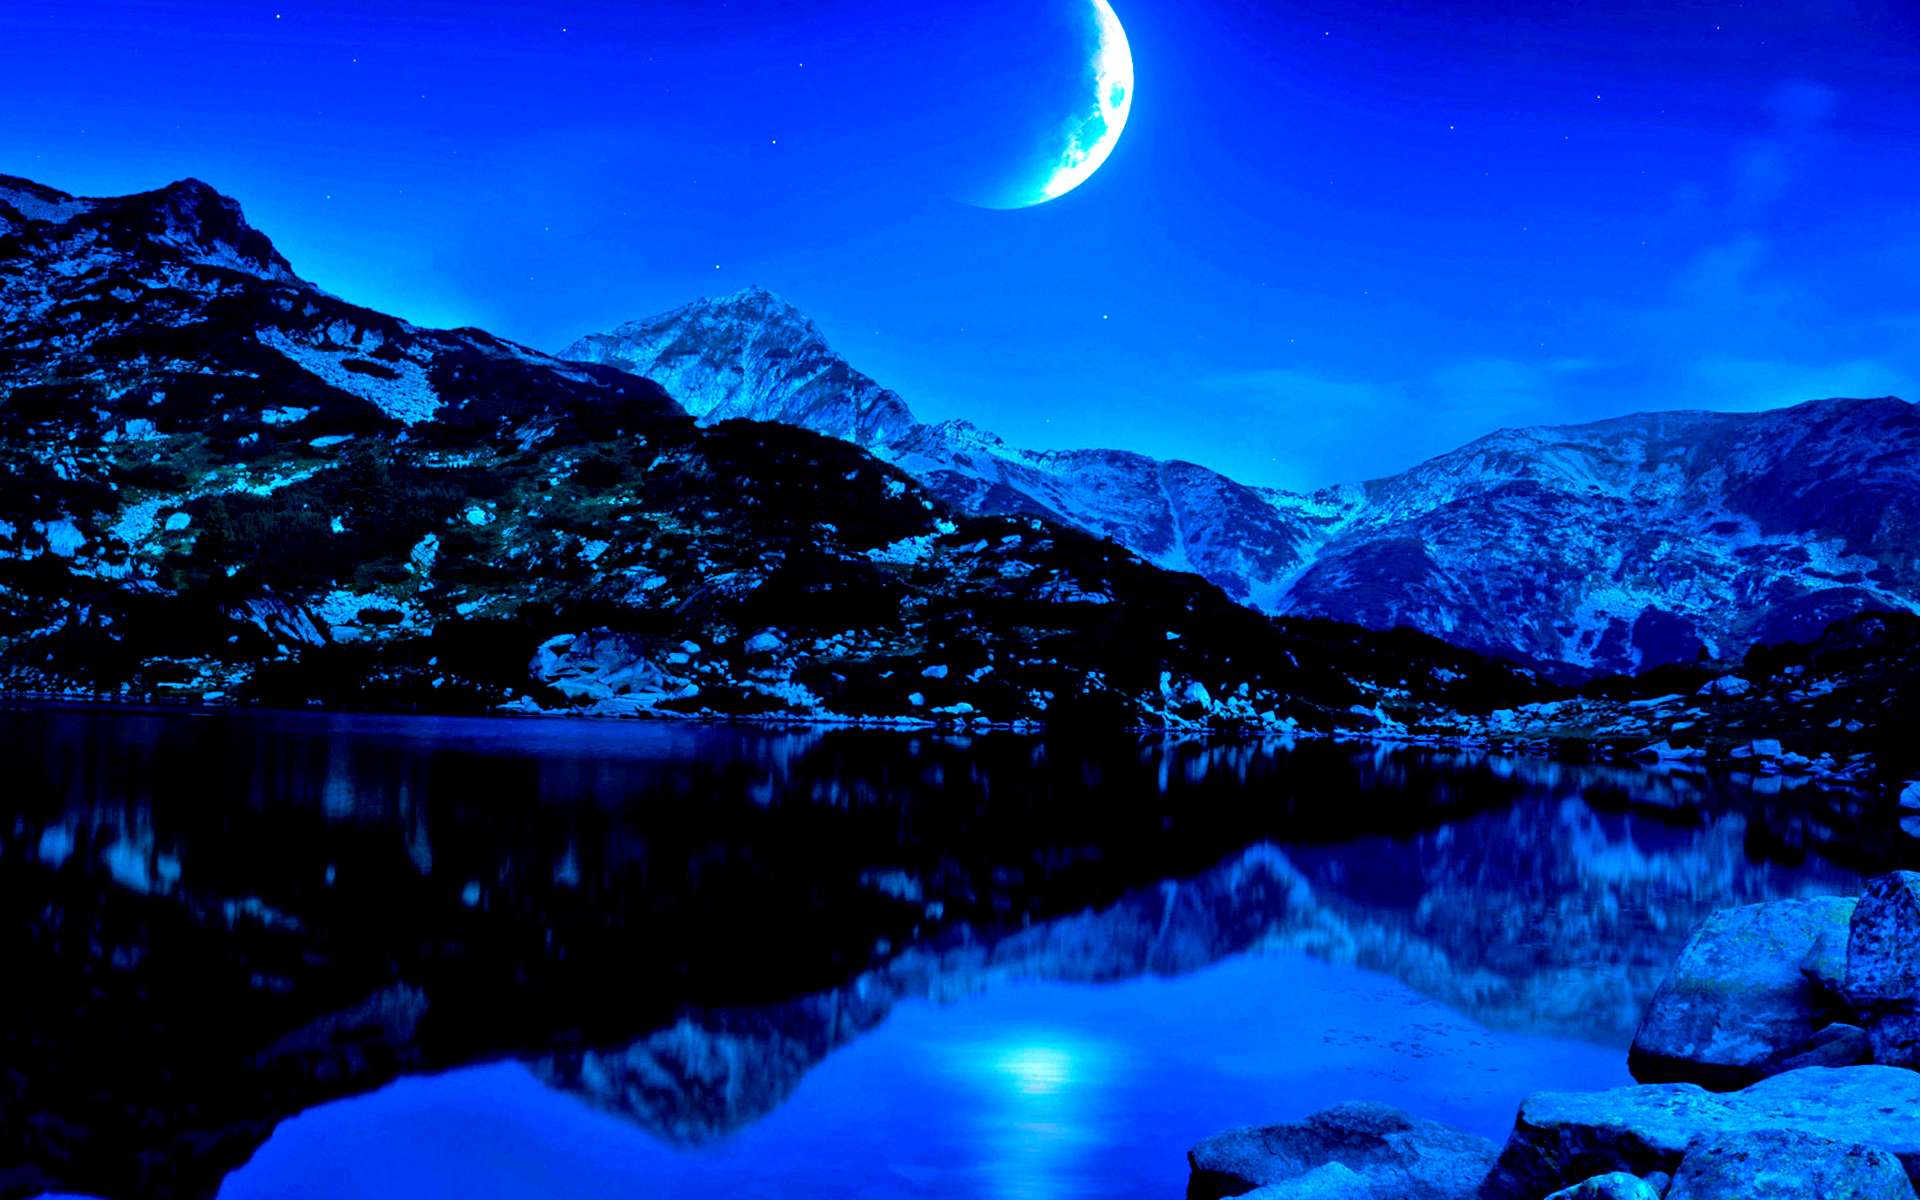 night nature wallpaper hd,nature,sky,natural landscape,moon,blue